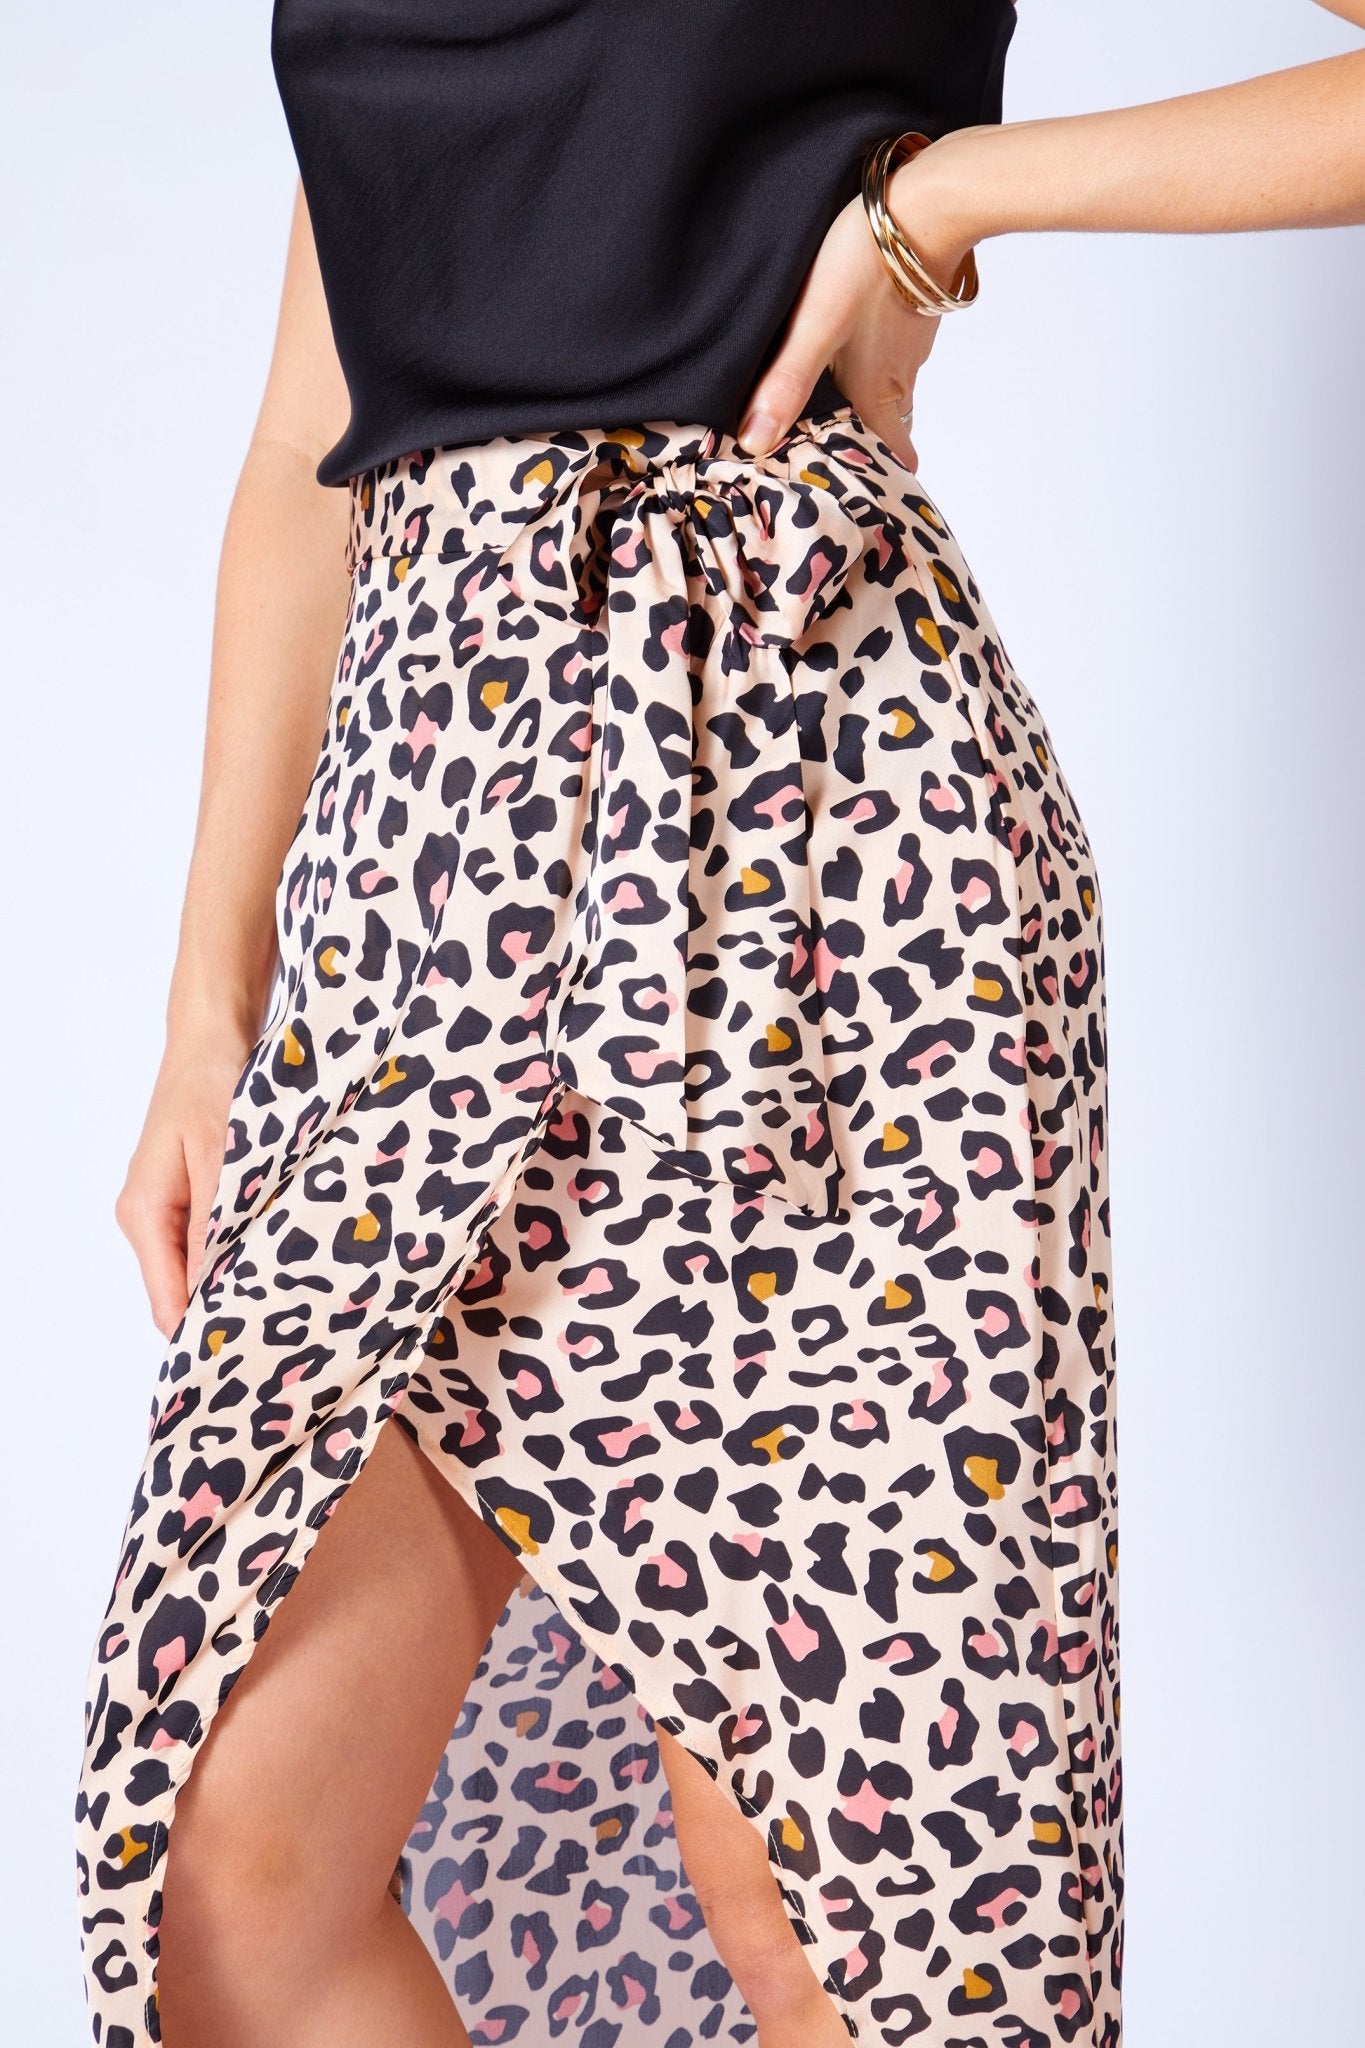 Sass Safari Queen Wrap Skirt in Beige with Print - Hey Sara